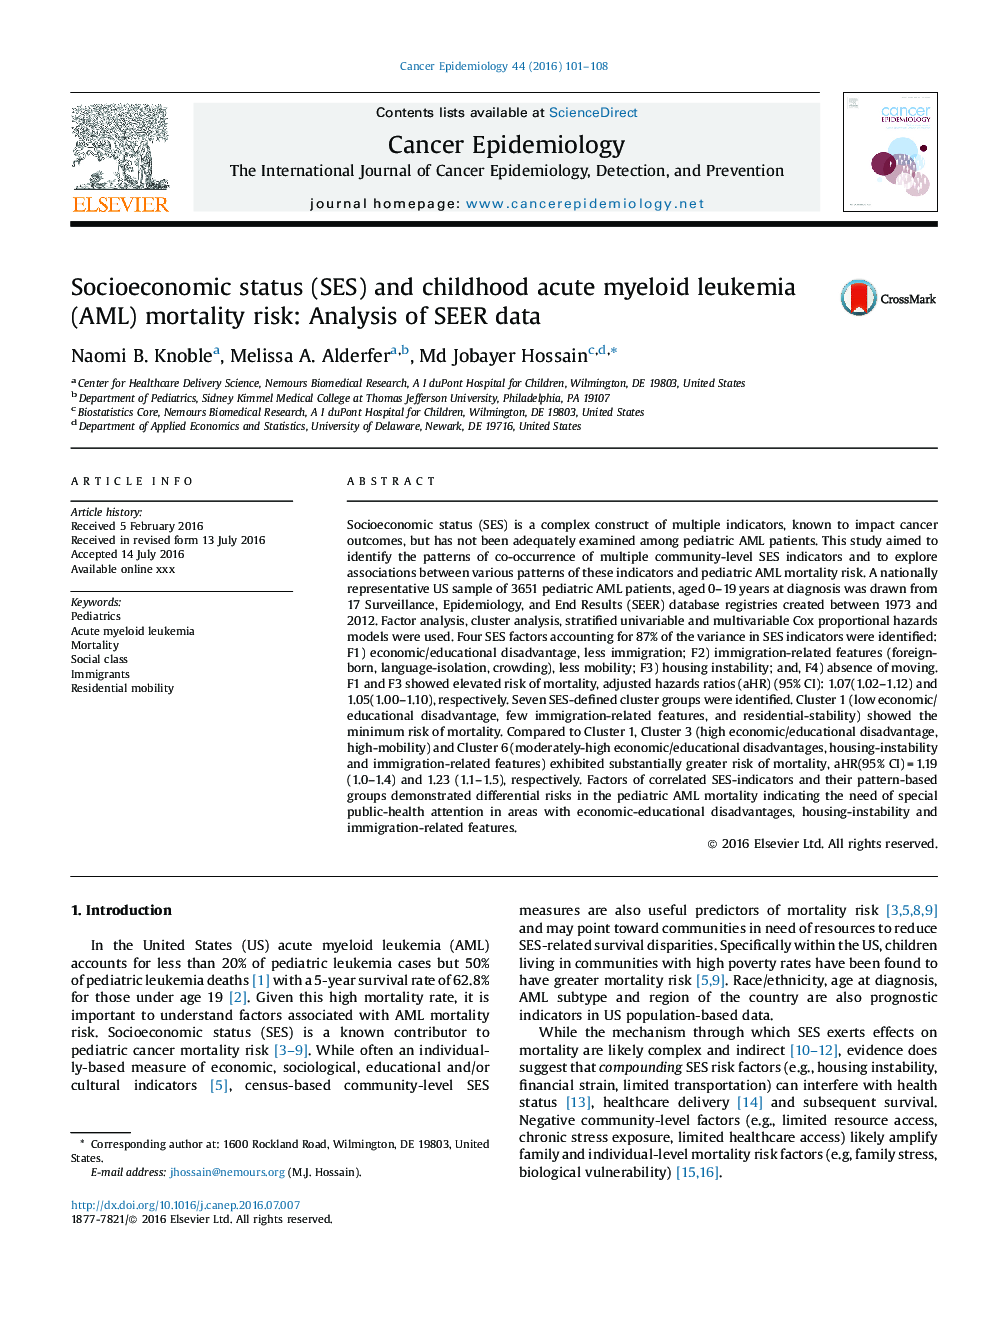 Socioeconomic status (SES) and childhood acute myeloid leukemia (AML) mortality risk: Analysis of SEER data